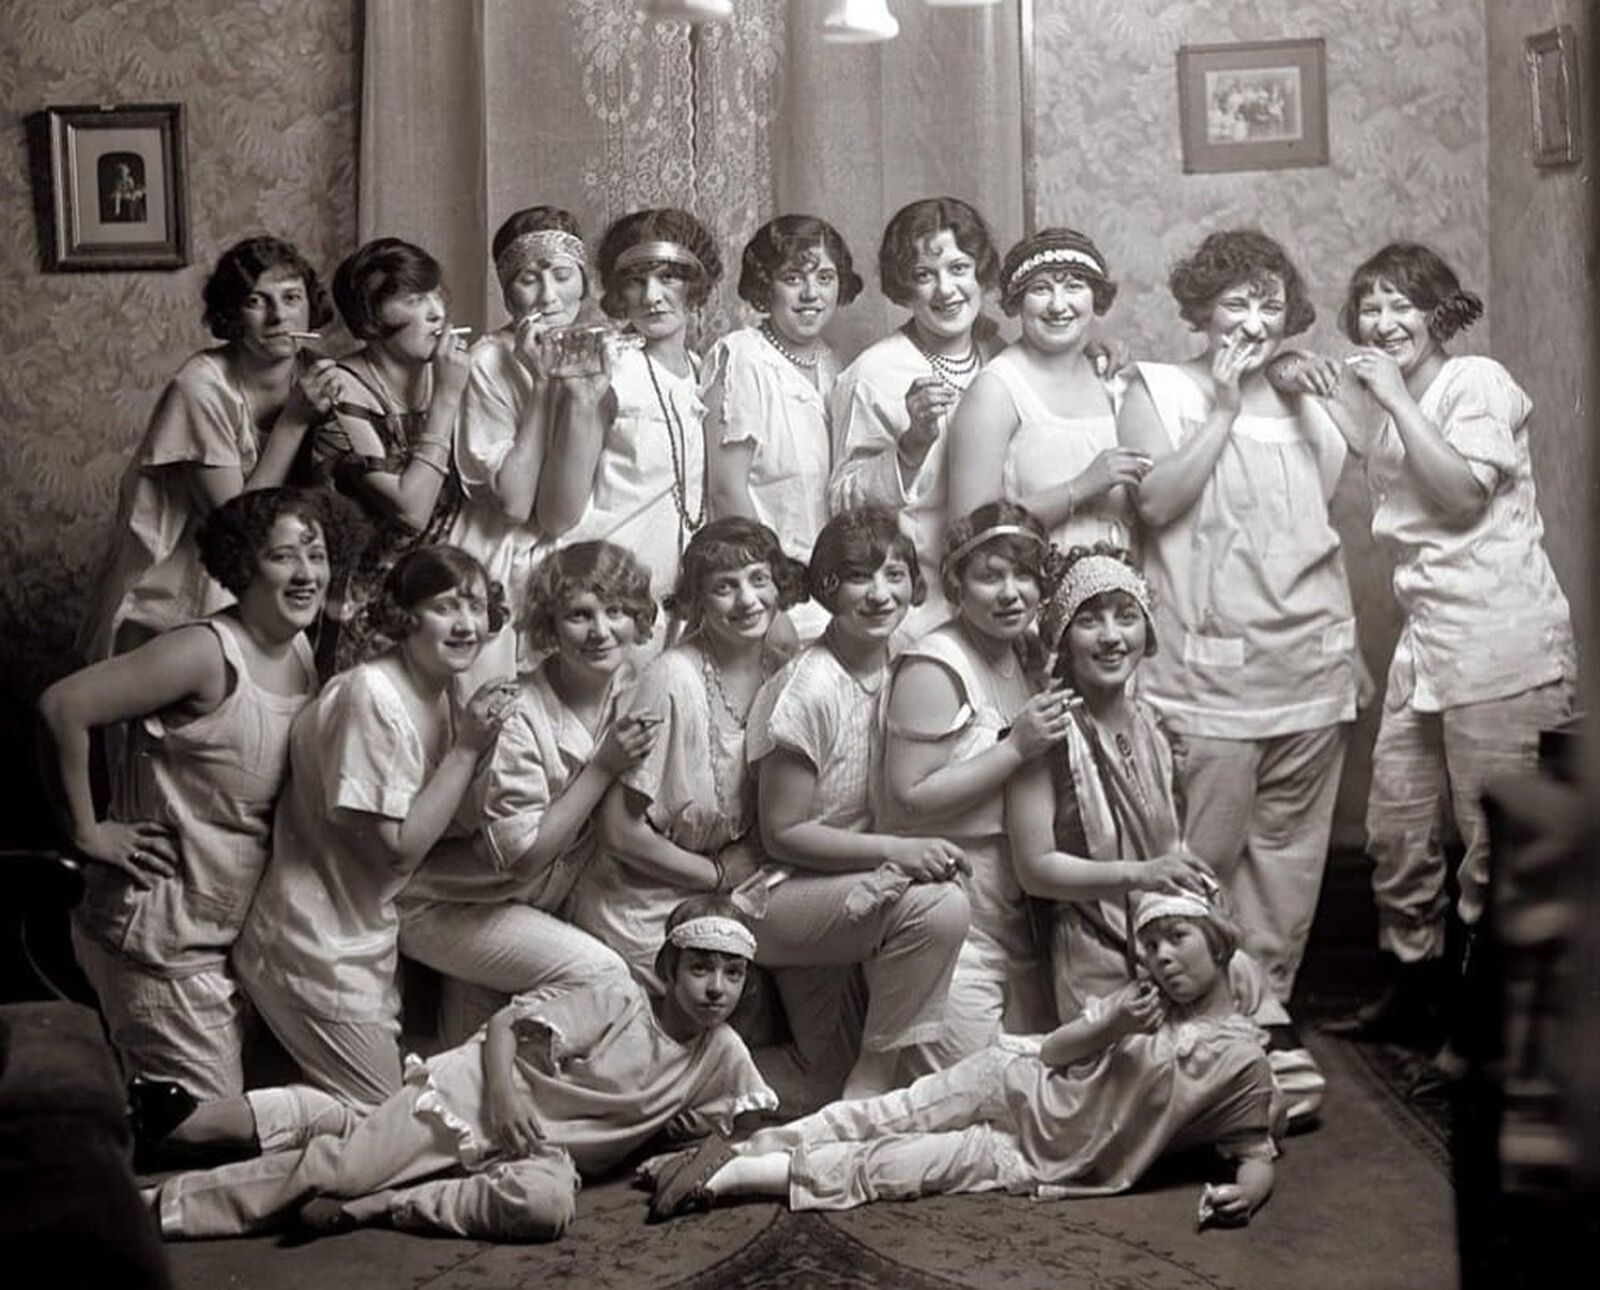 1924 YOUNG LADIES PAJAMA PARTY Photo  (227-Z)